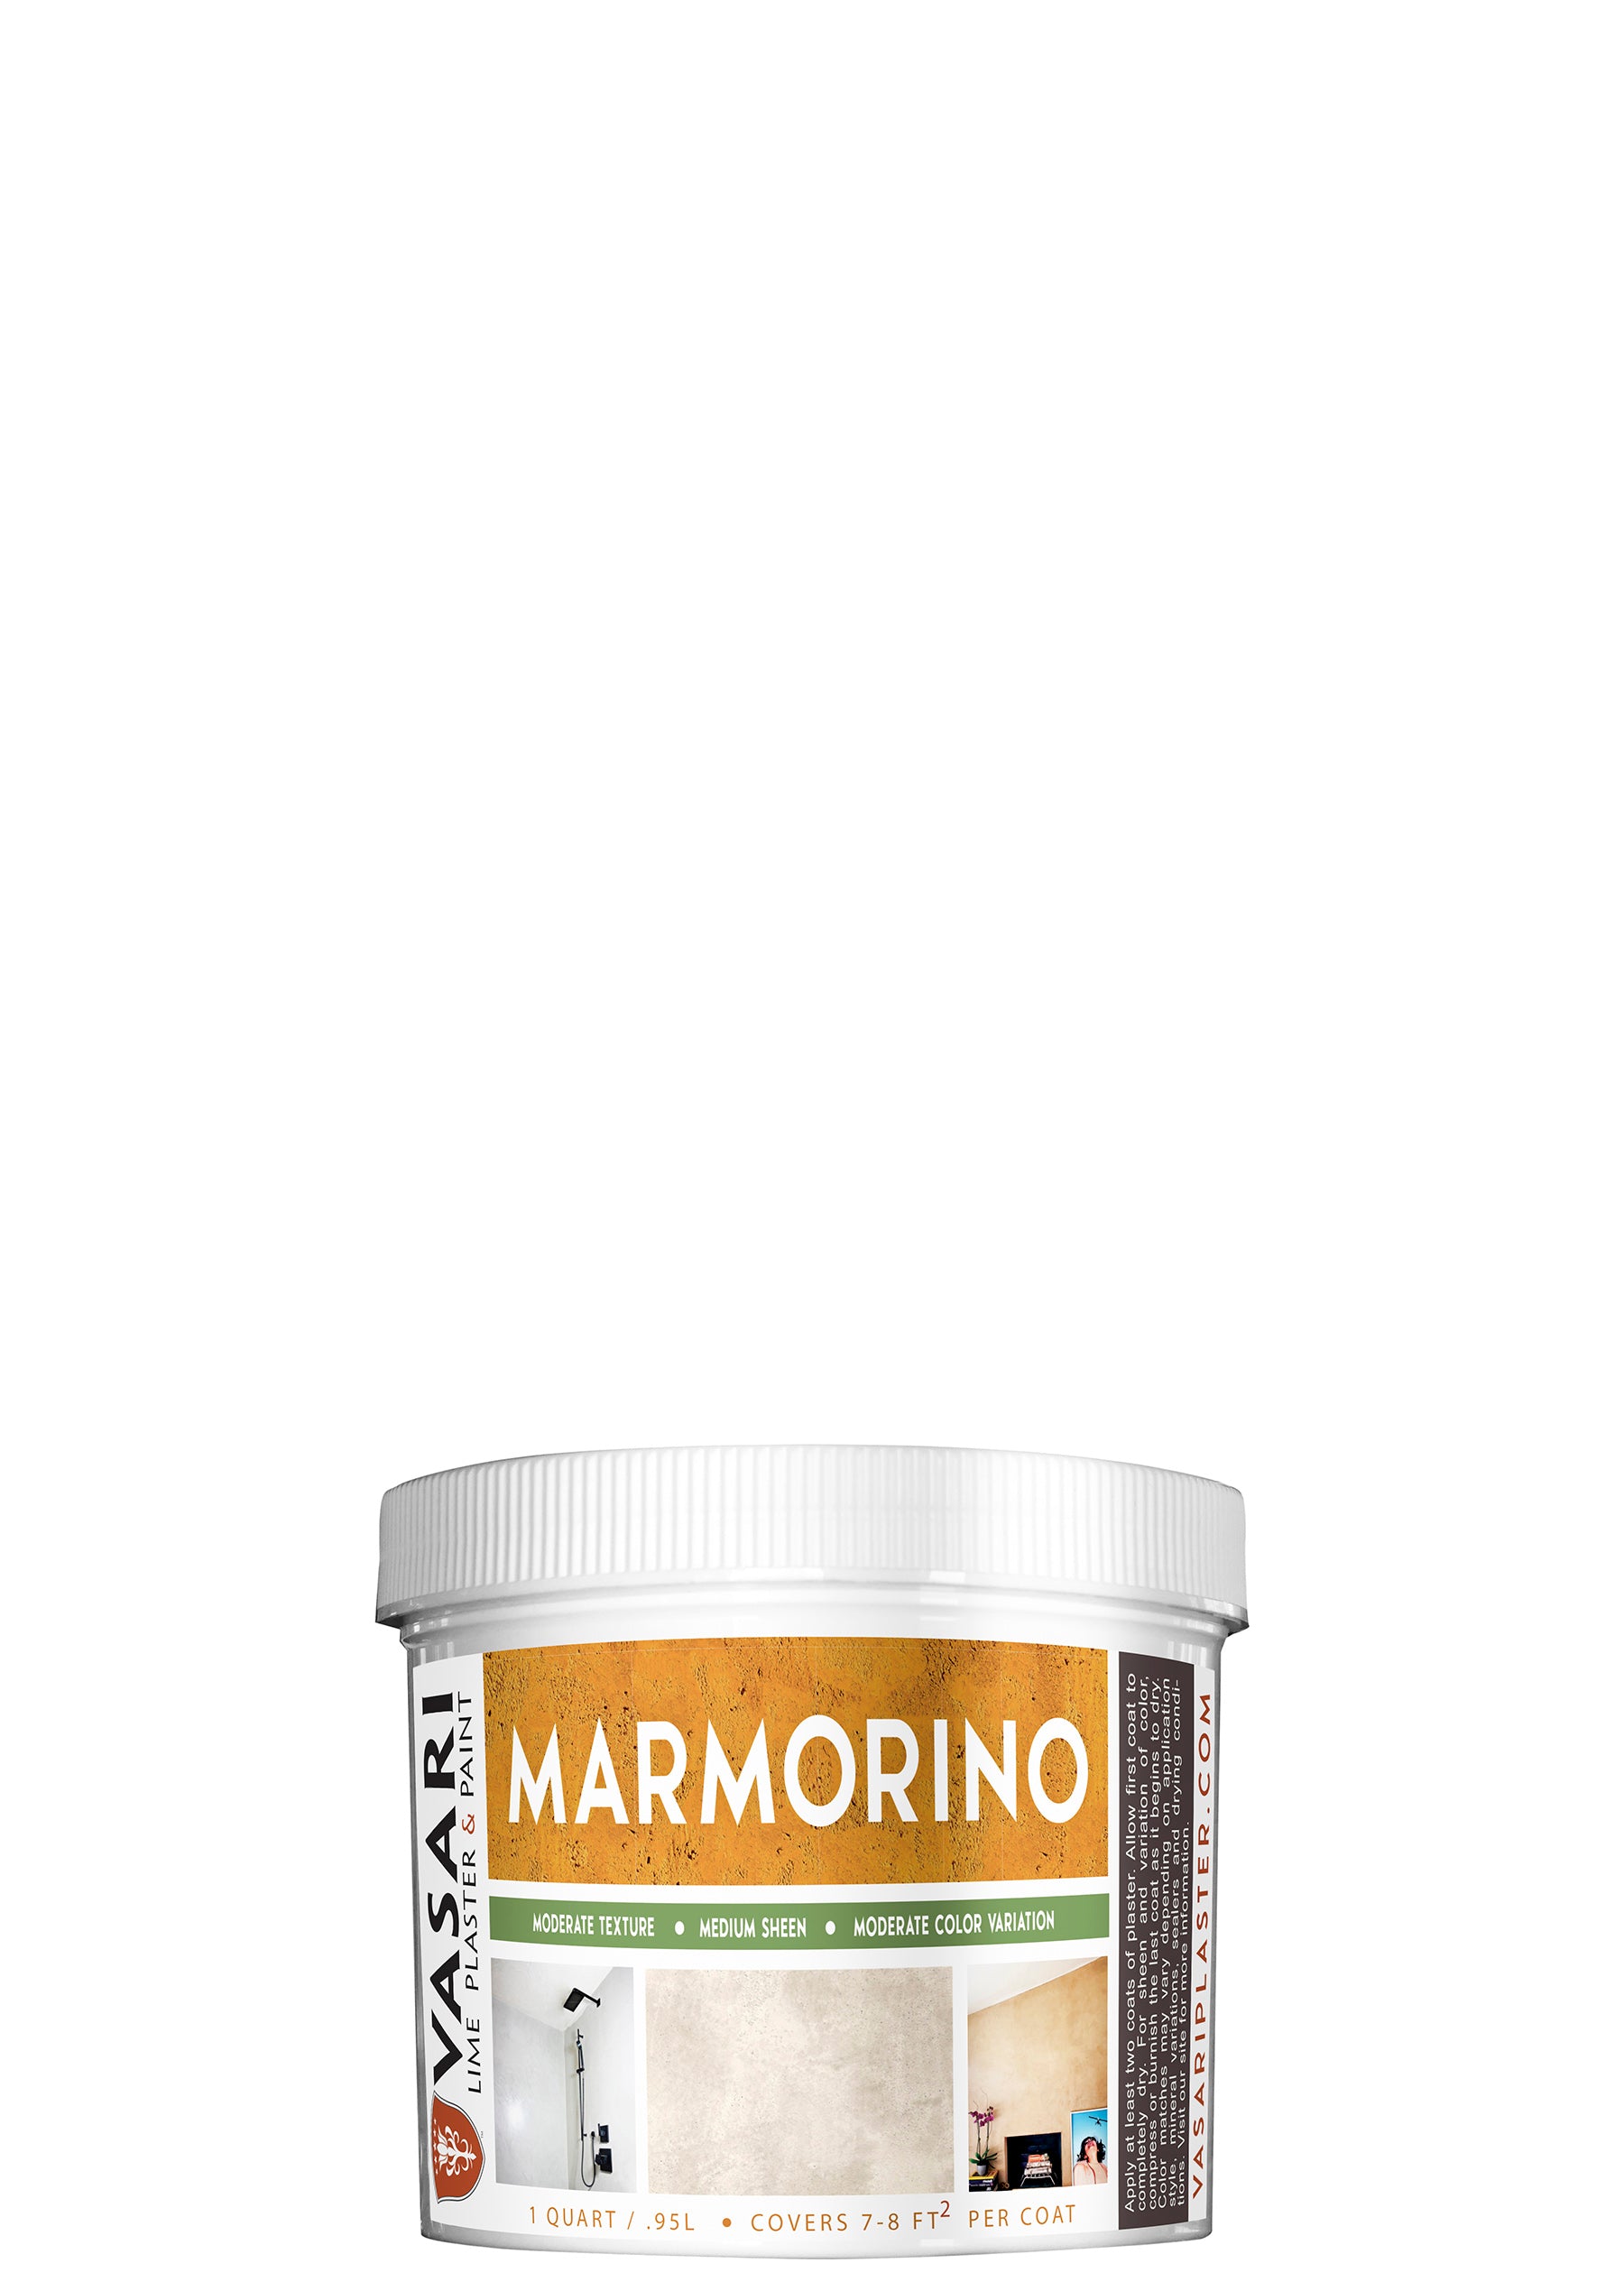 MARMORINO  -  1 QUART